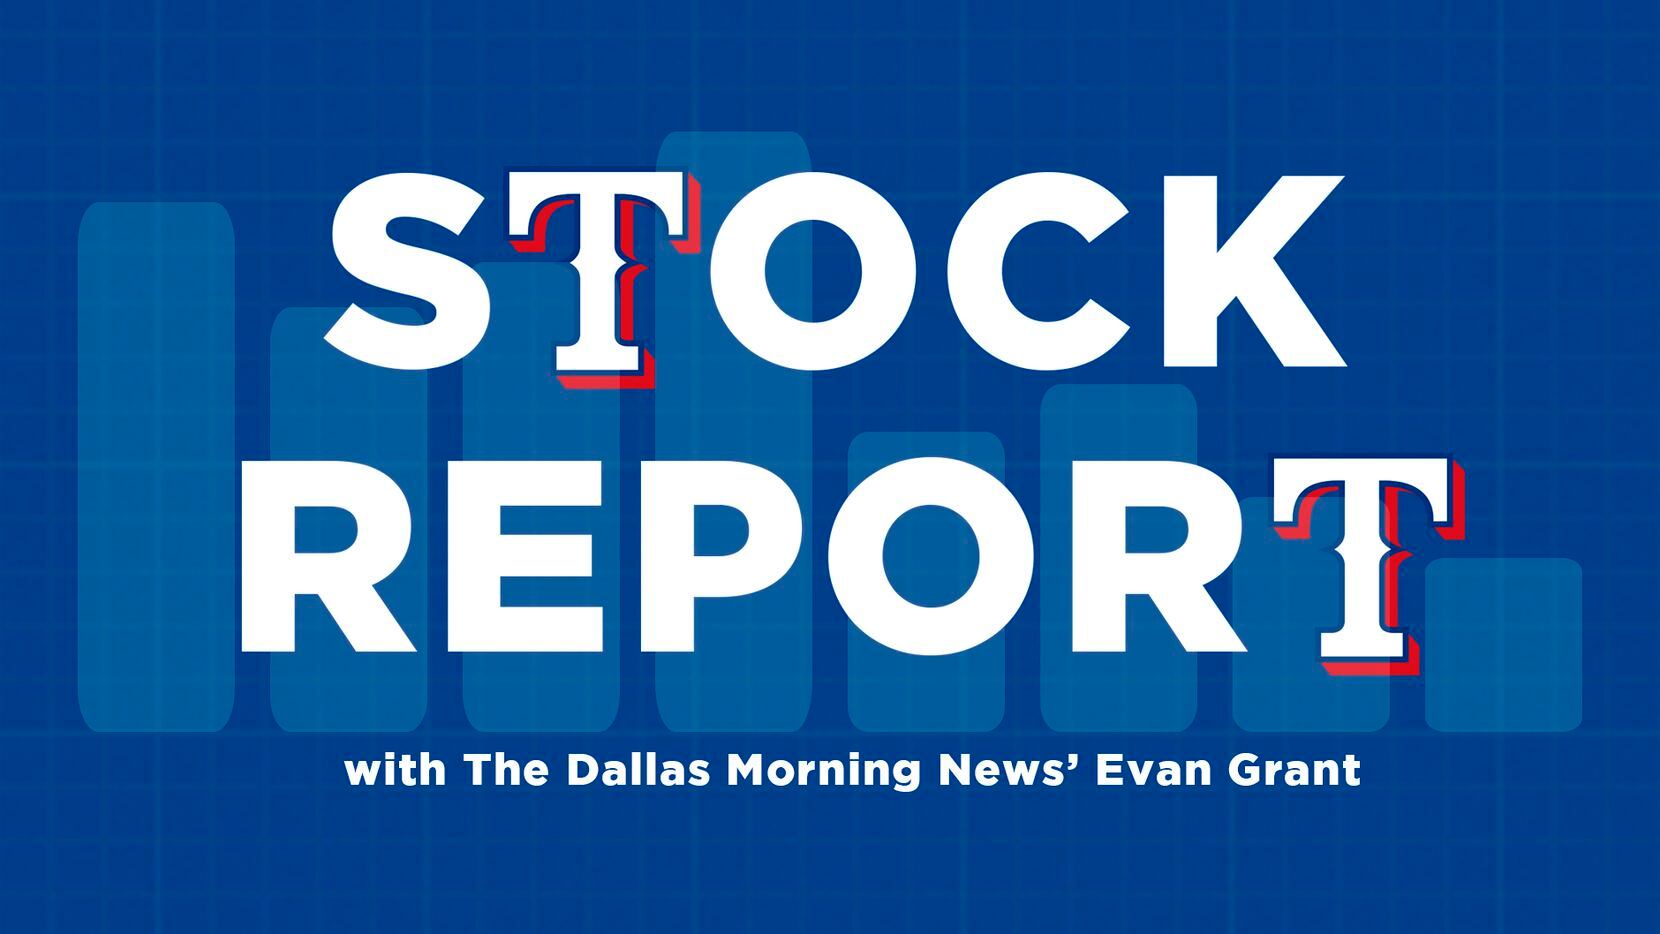 Texas Rangers stock report.